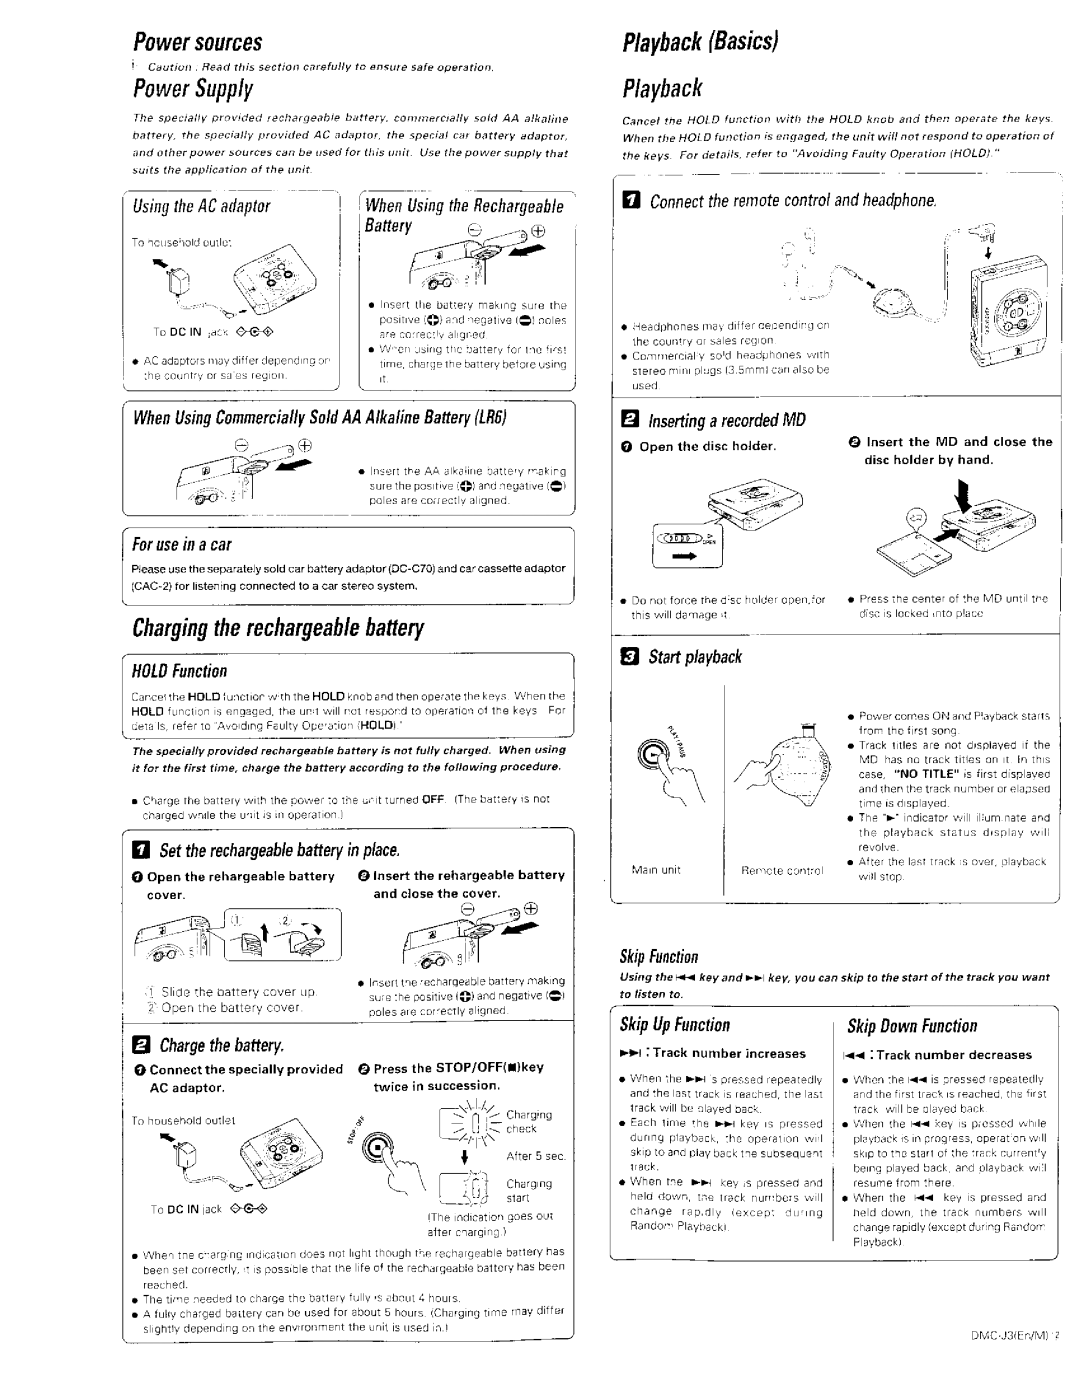 Kenwood DMC-J3 manual 